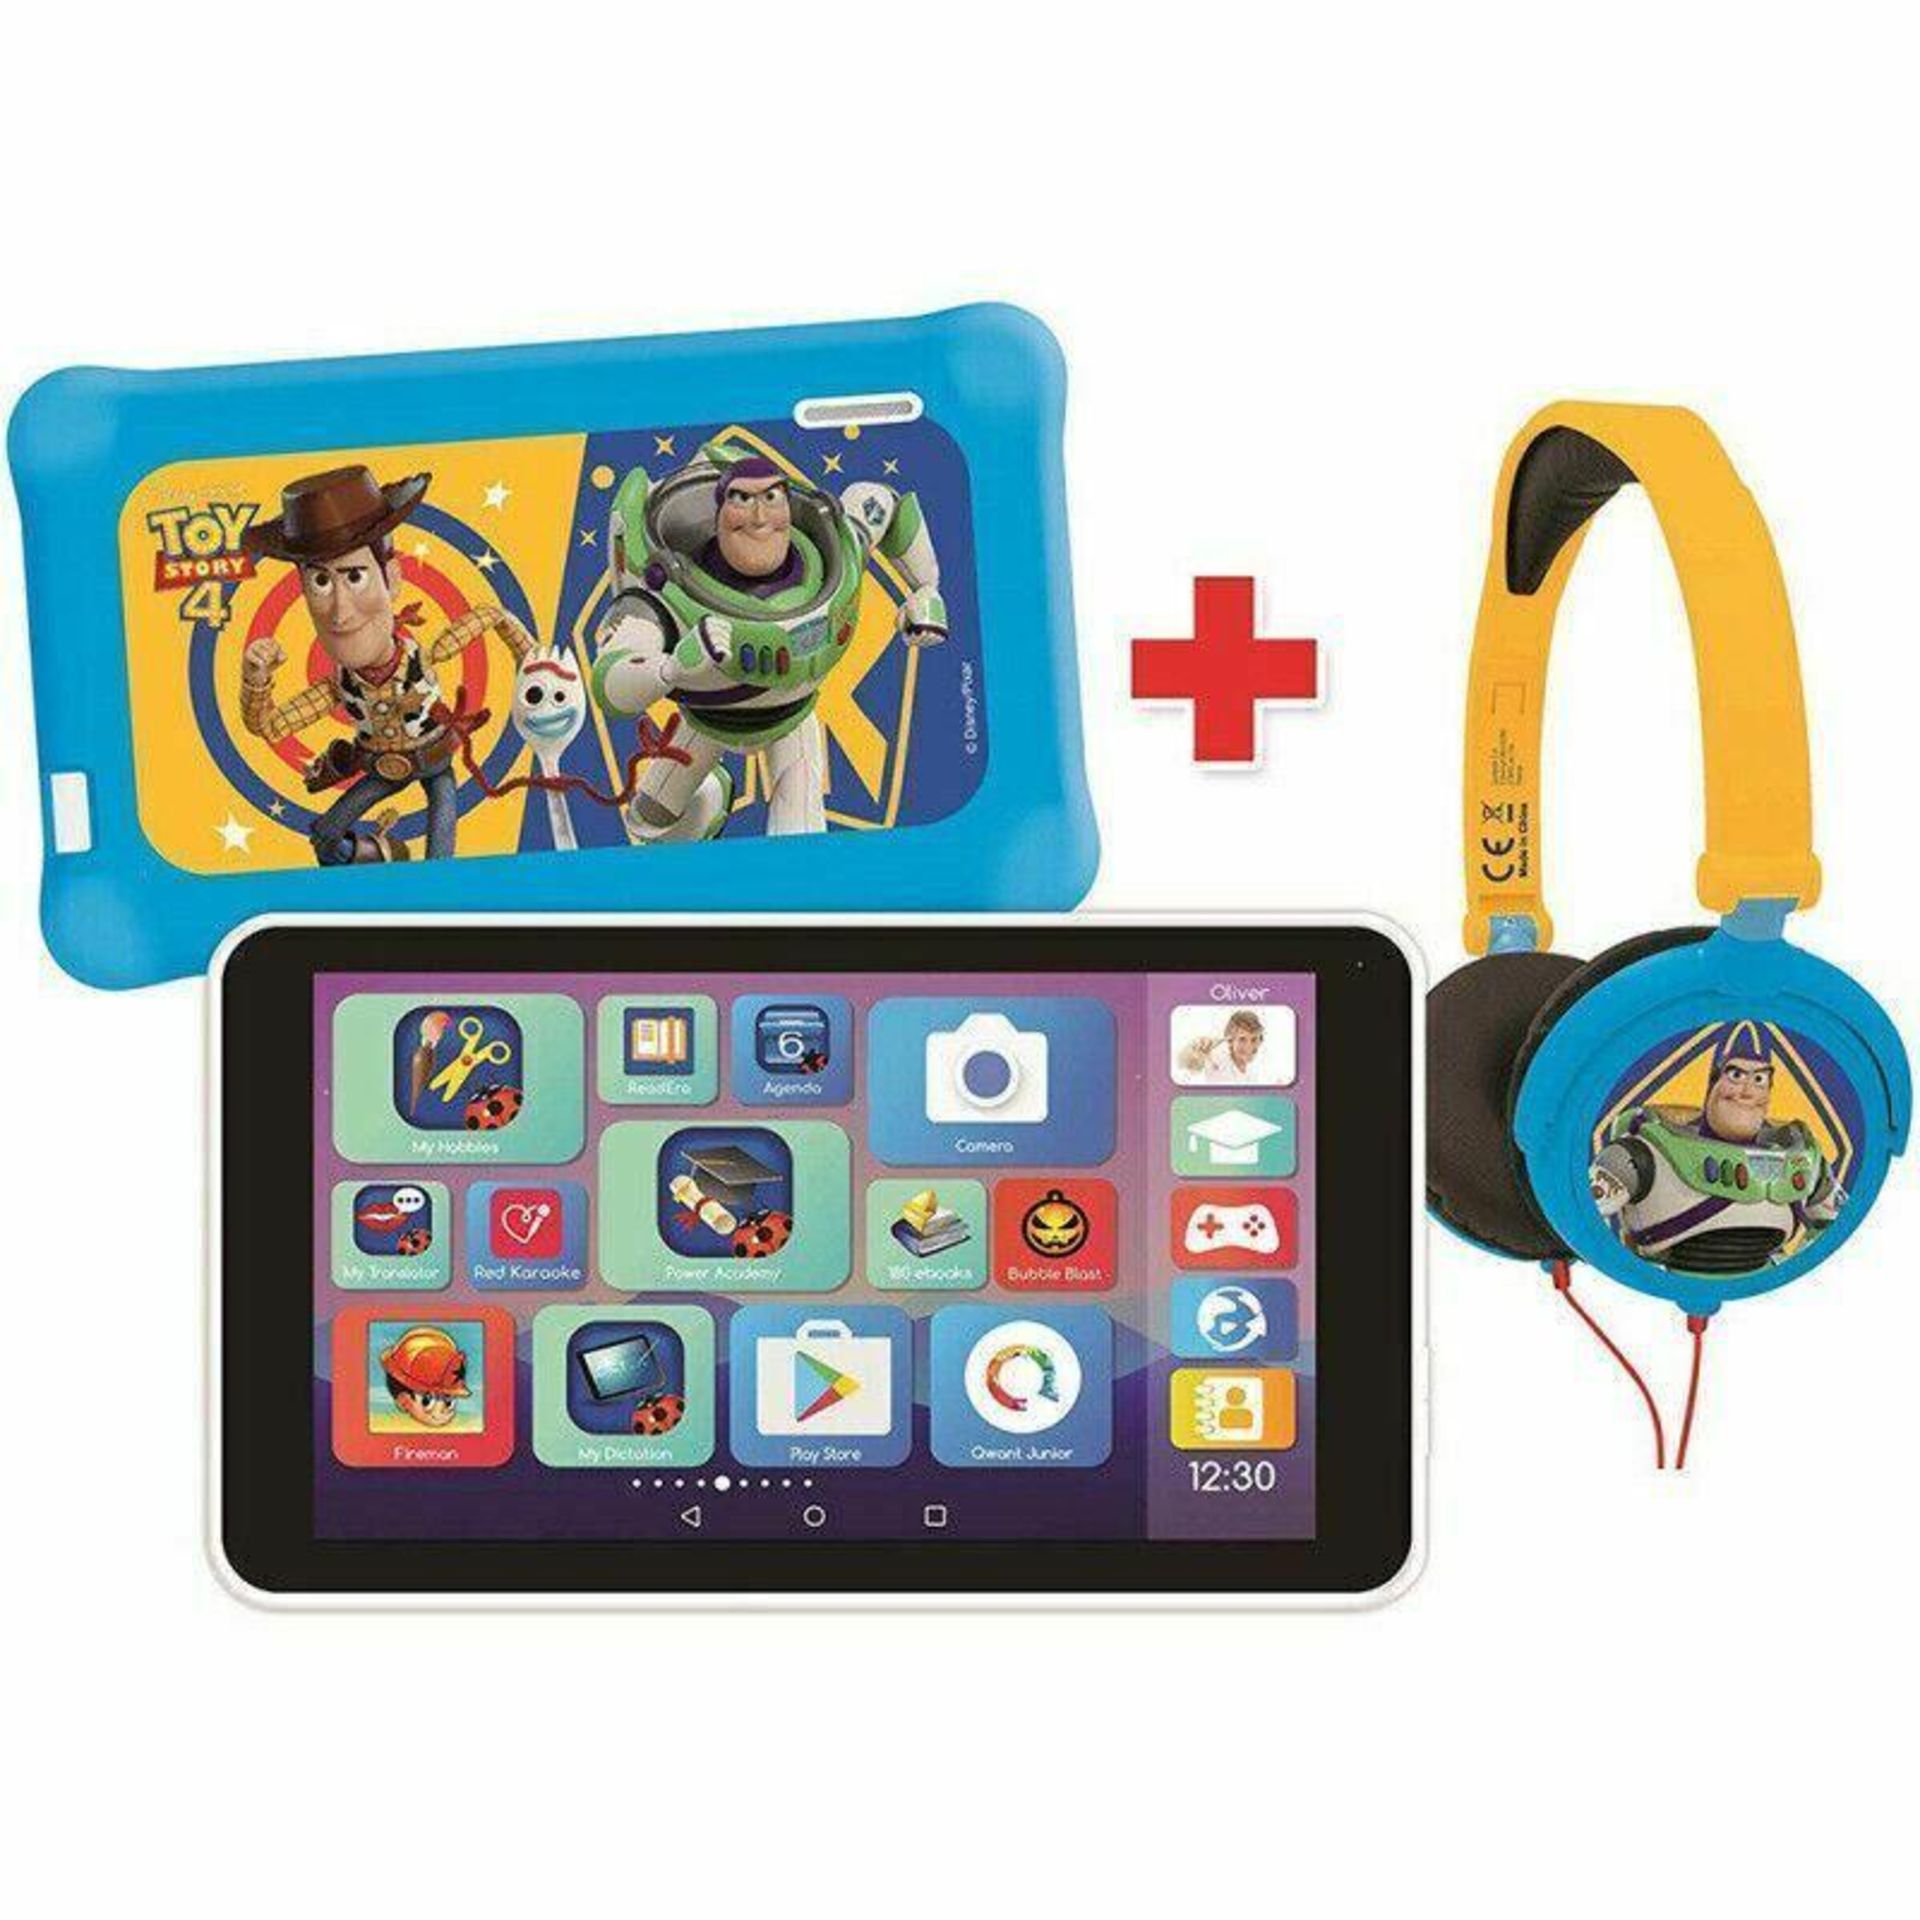 Lexibook LexiTab Master 7' Kids Tablet│Disney Toy Story 4 Case│Headphone│£55.00 RRP